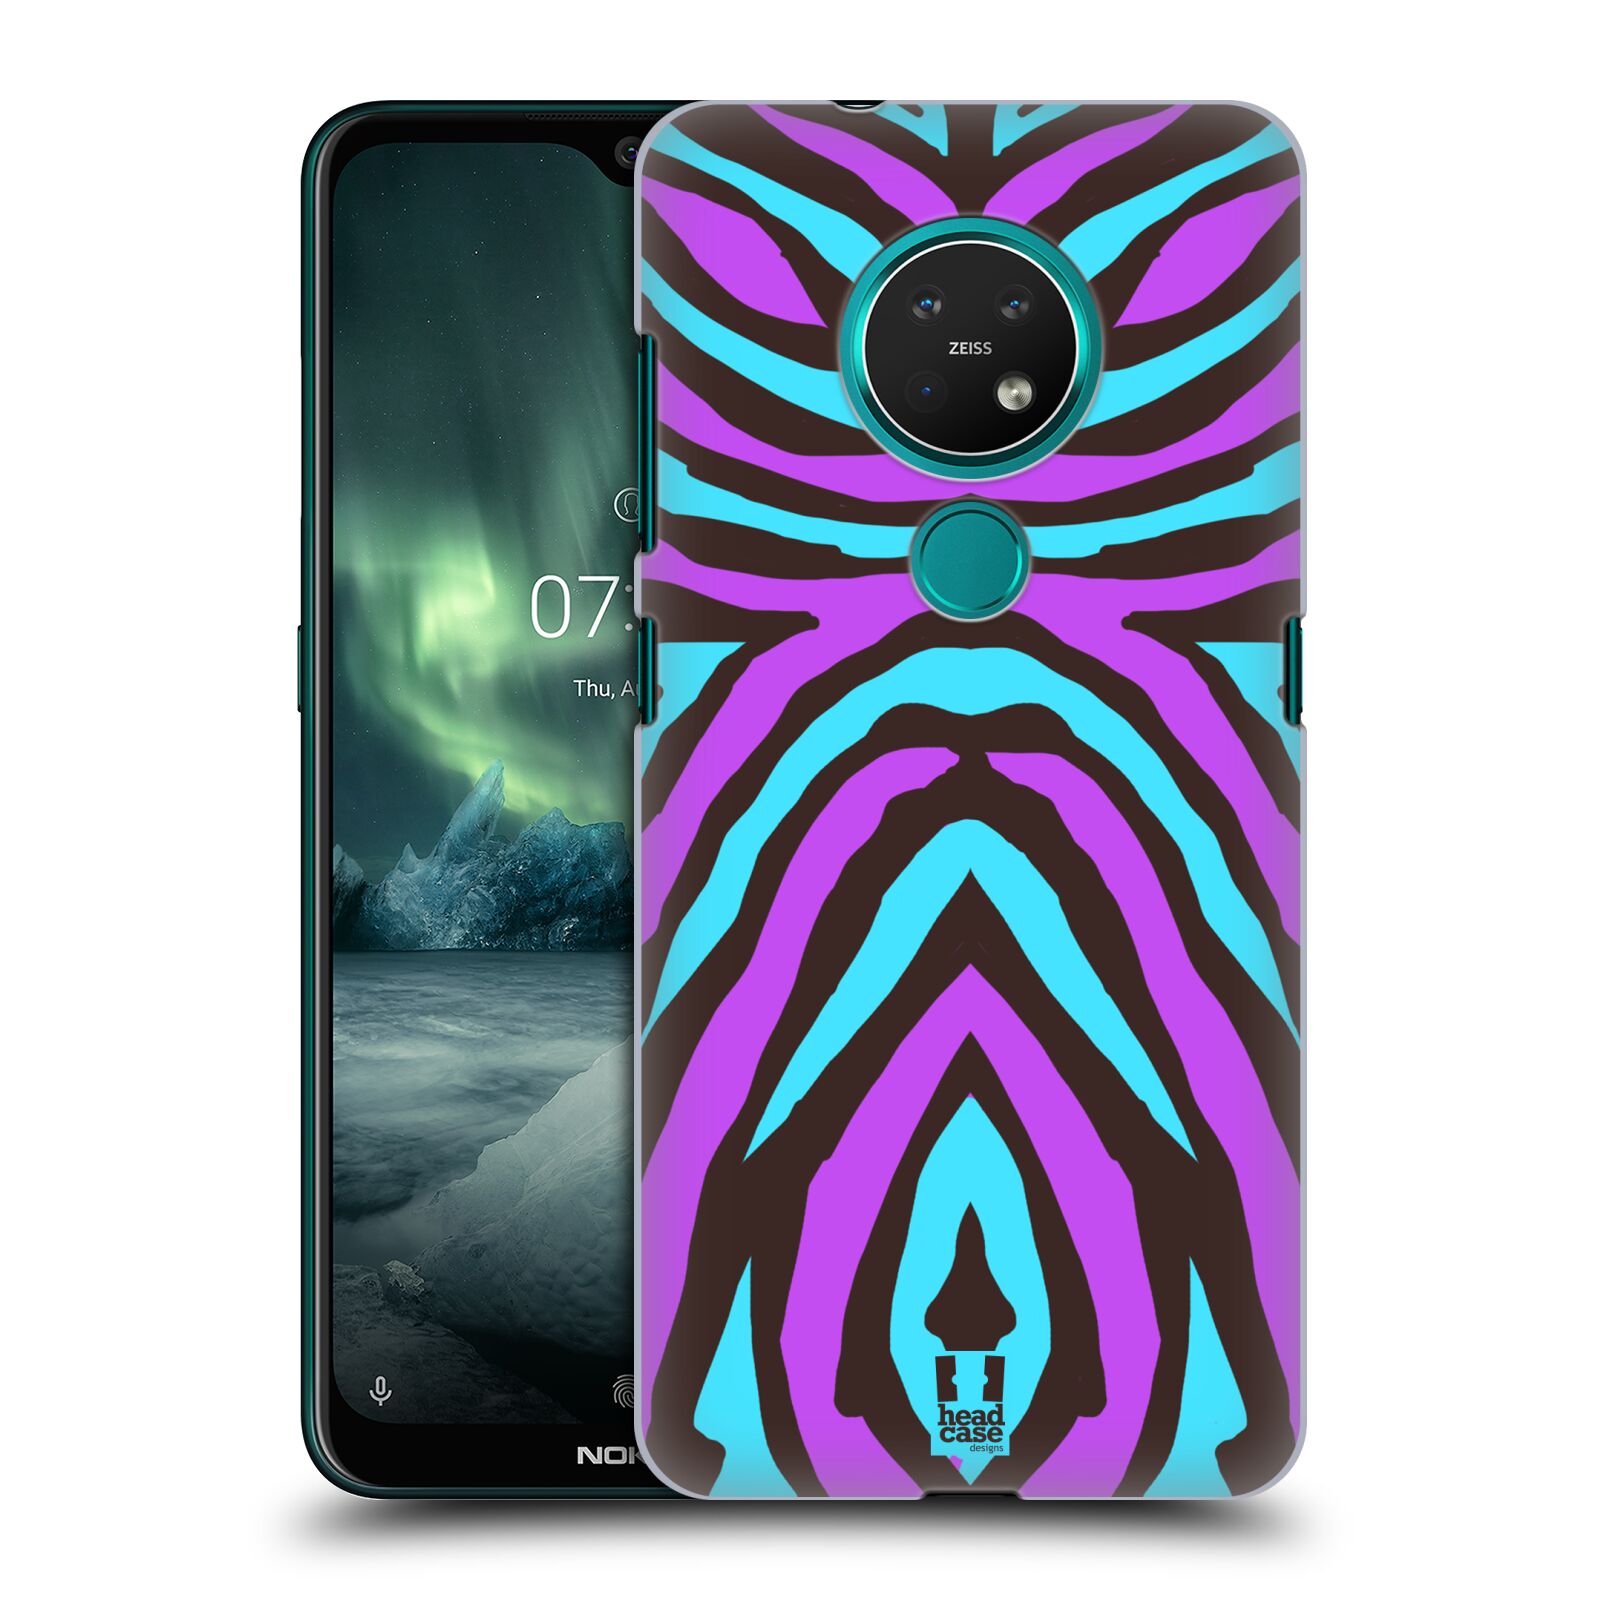 Pouzdro na mobil NOKIA 7.2 - HEAD CASE - vzor Divočina zvíře 2 bláznivé pruhy fialová a modrá